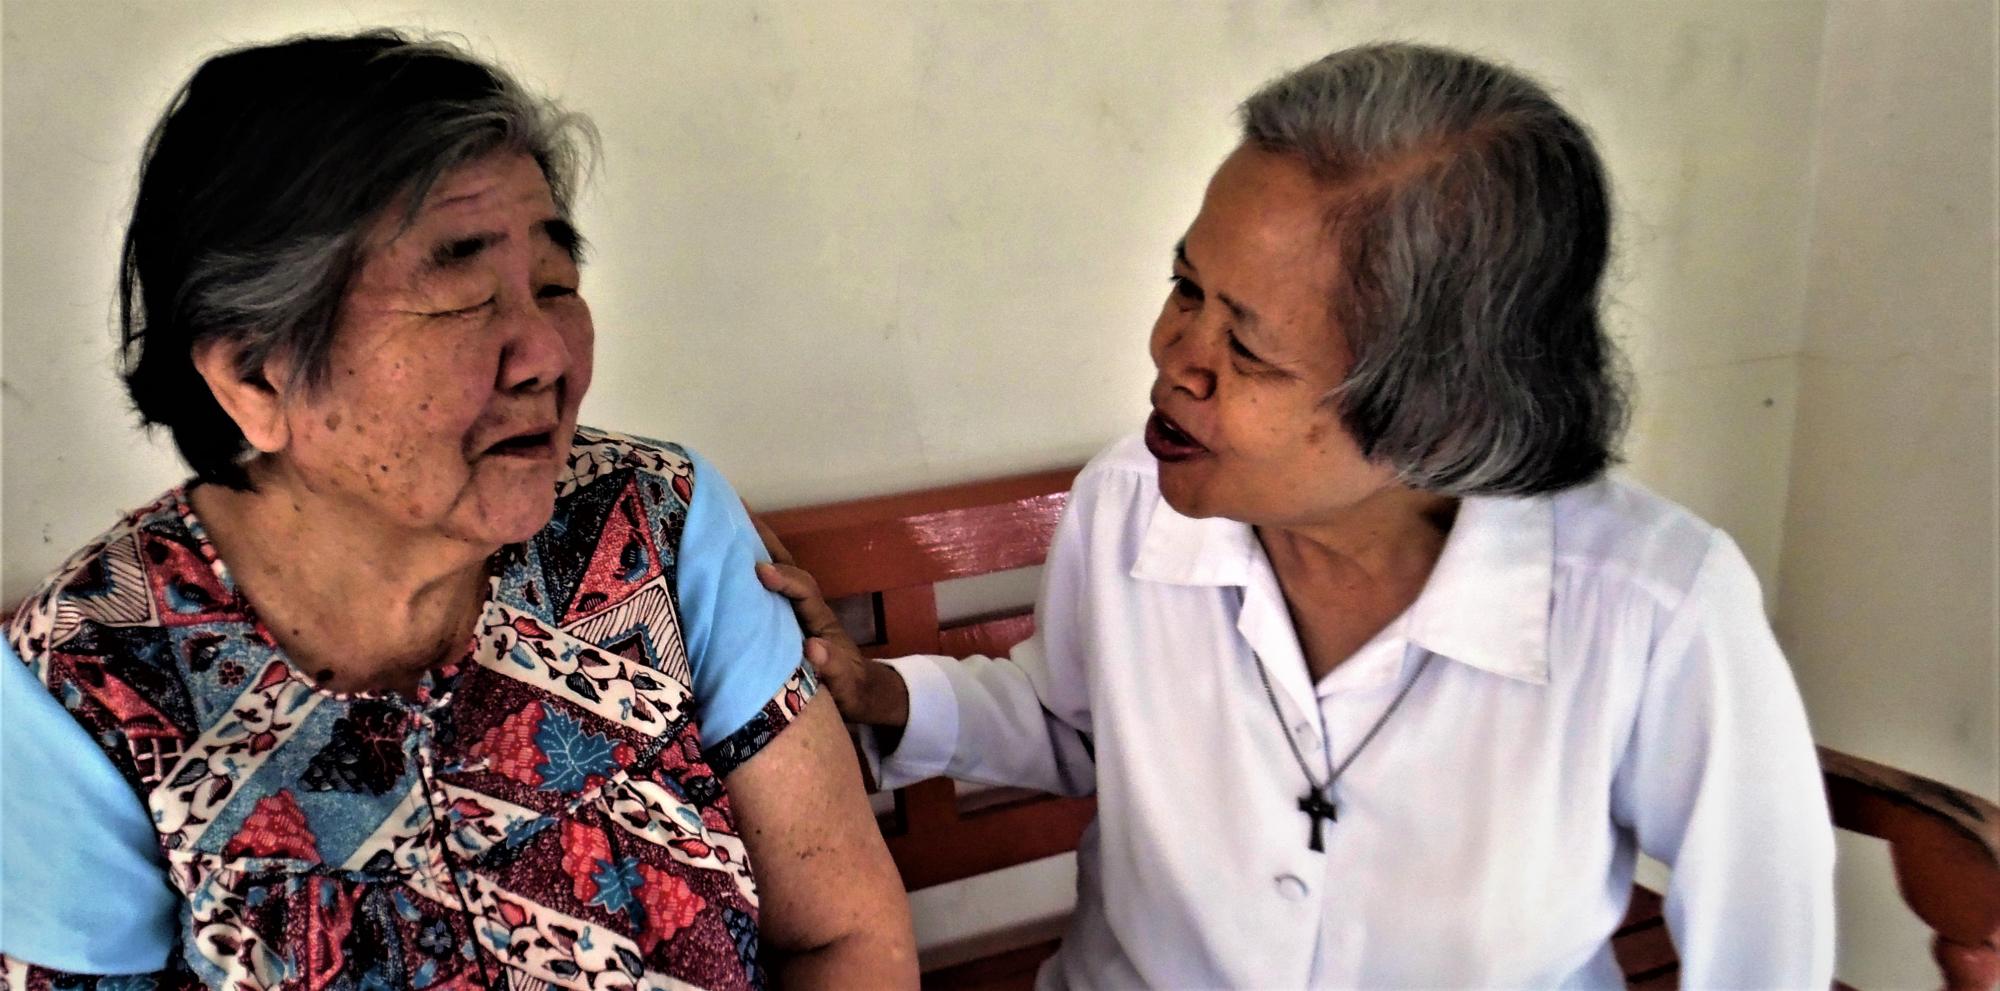 Visiting an elderly resident of a home in Kadipiro Solo